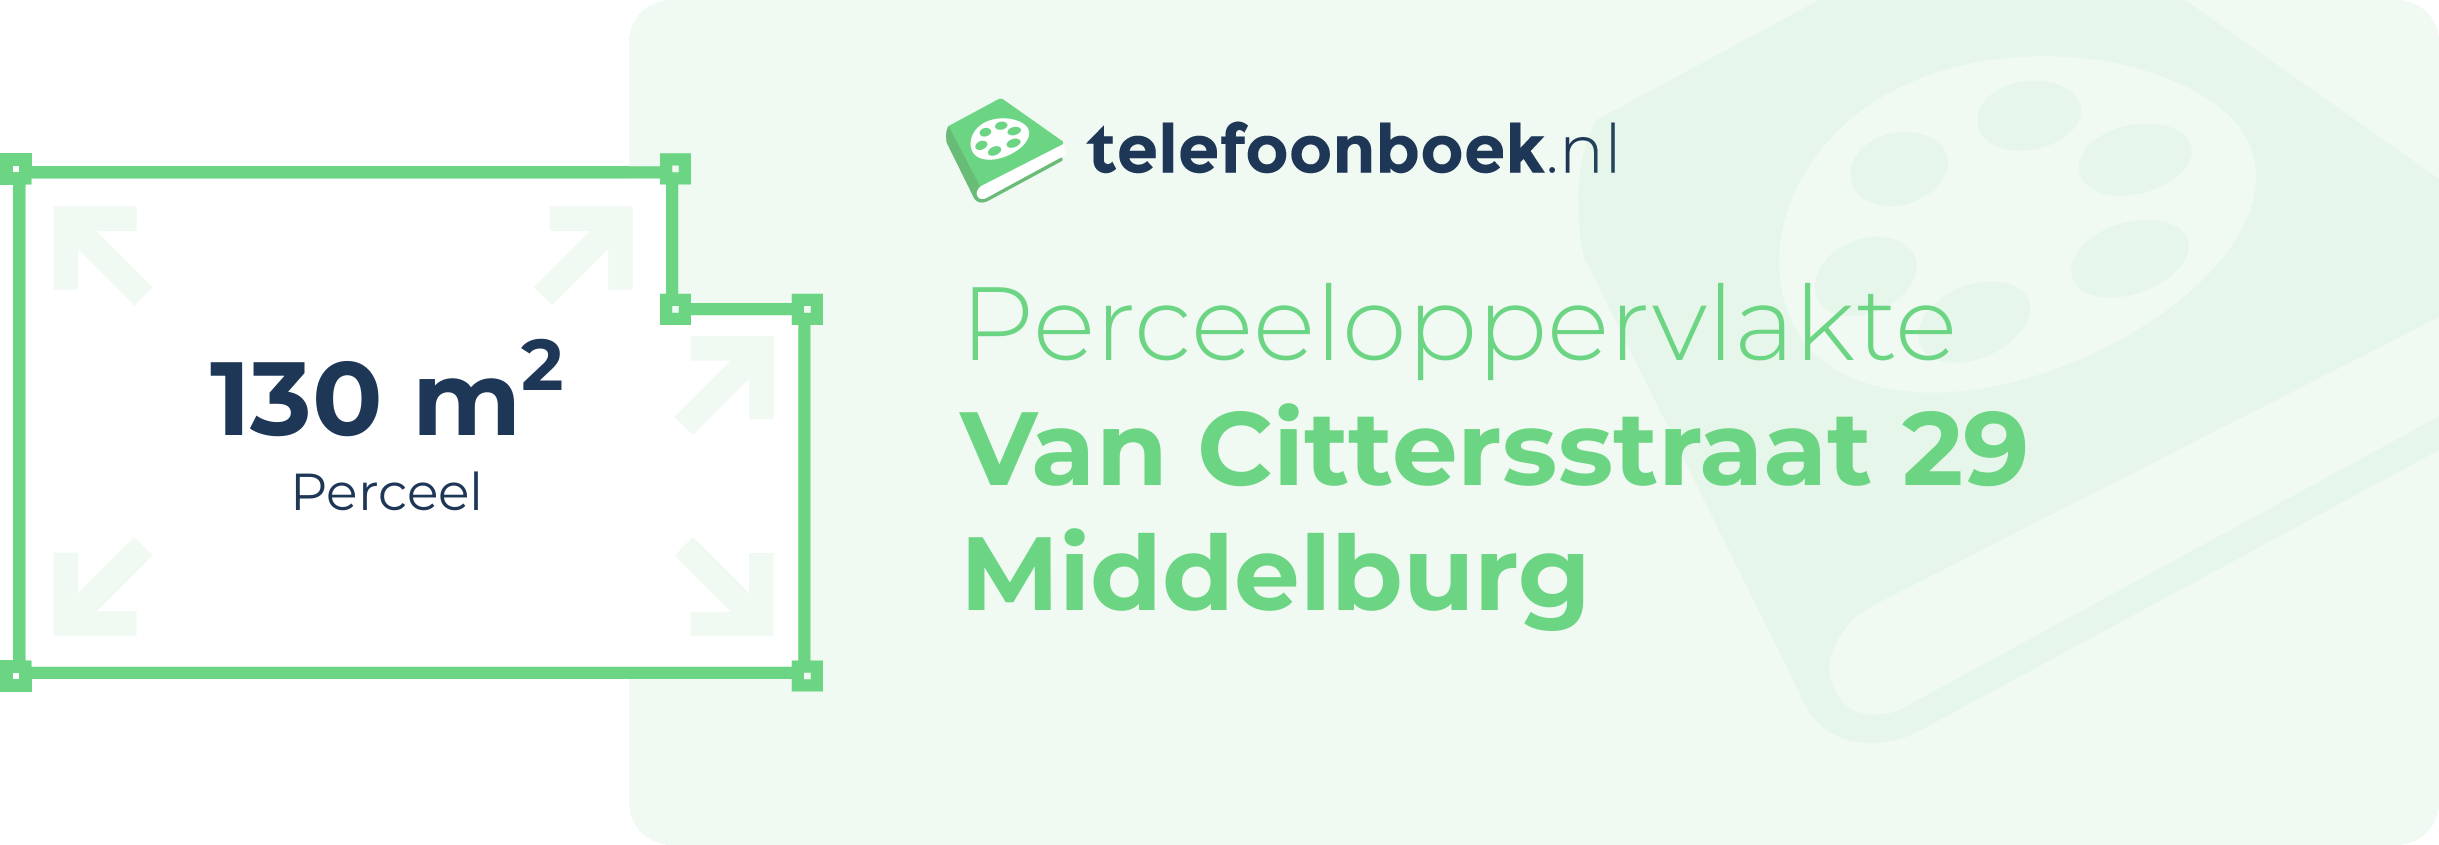 Perceeloppervlakte Van Cittersstraat 29 Middelburg